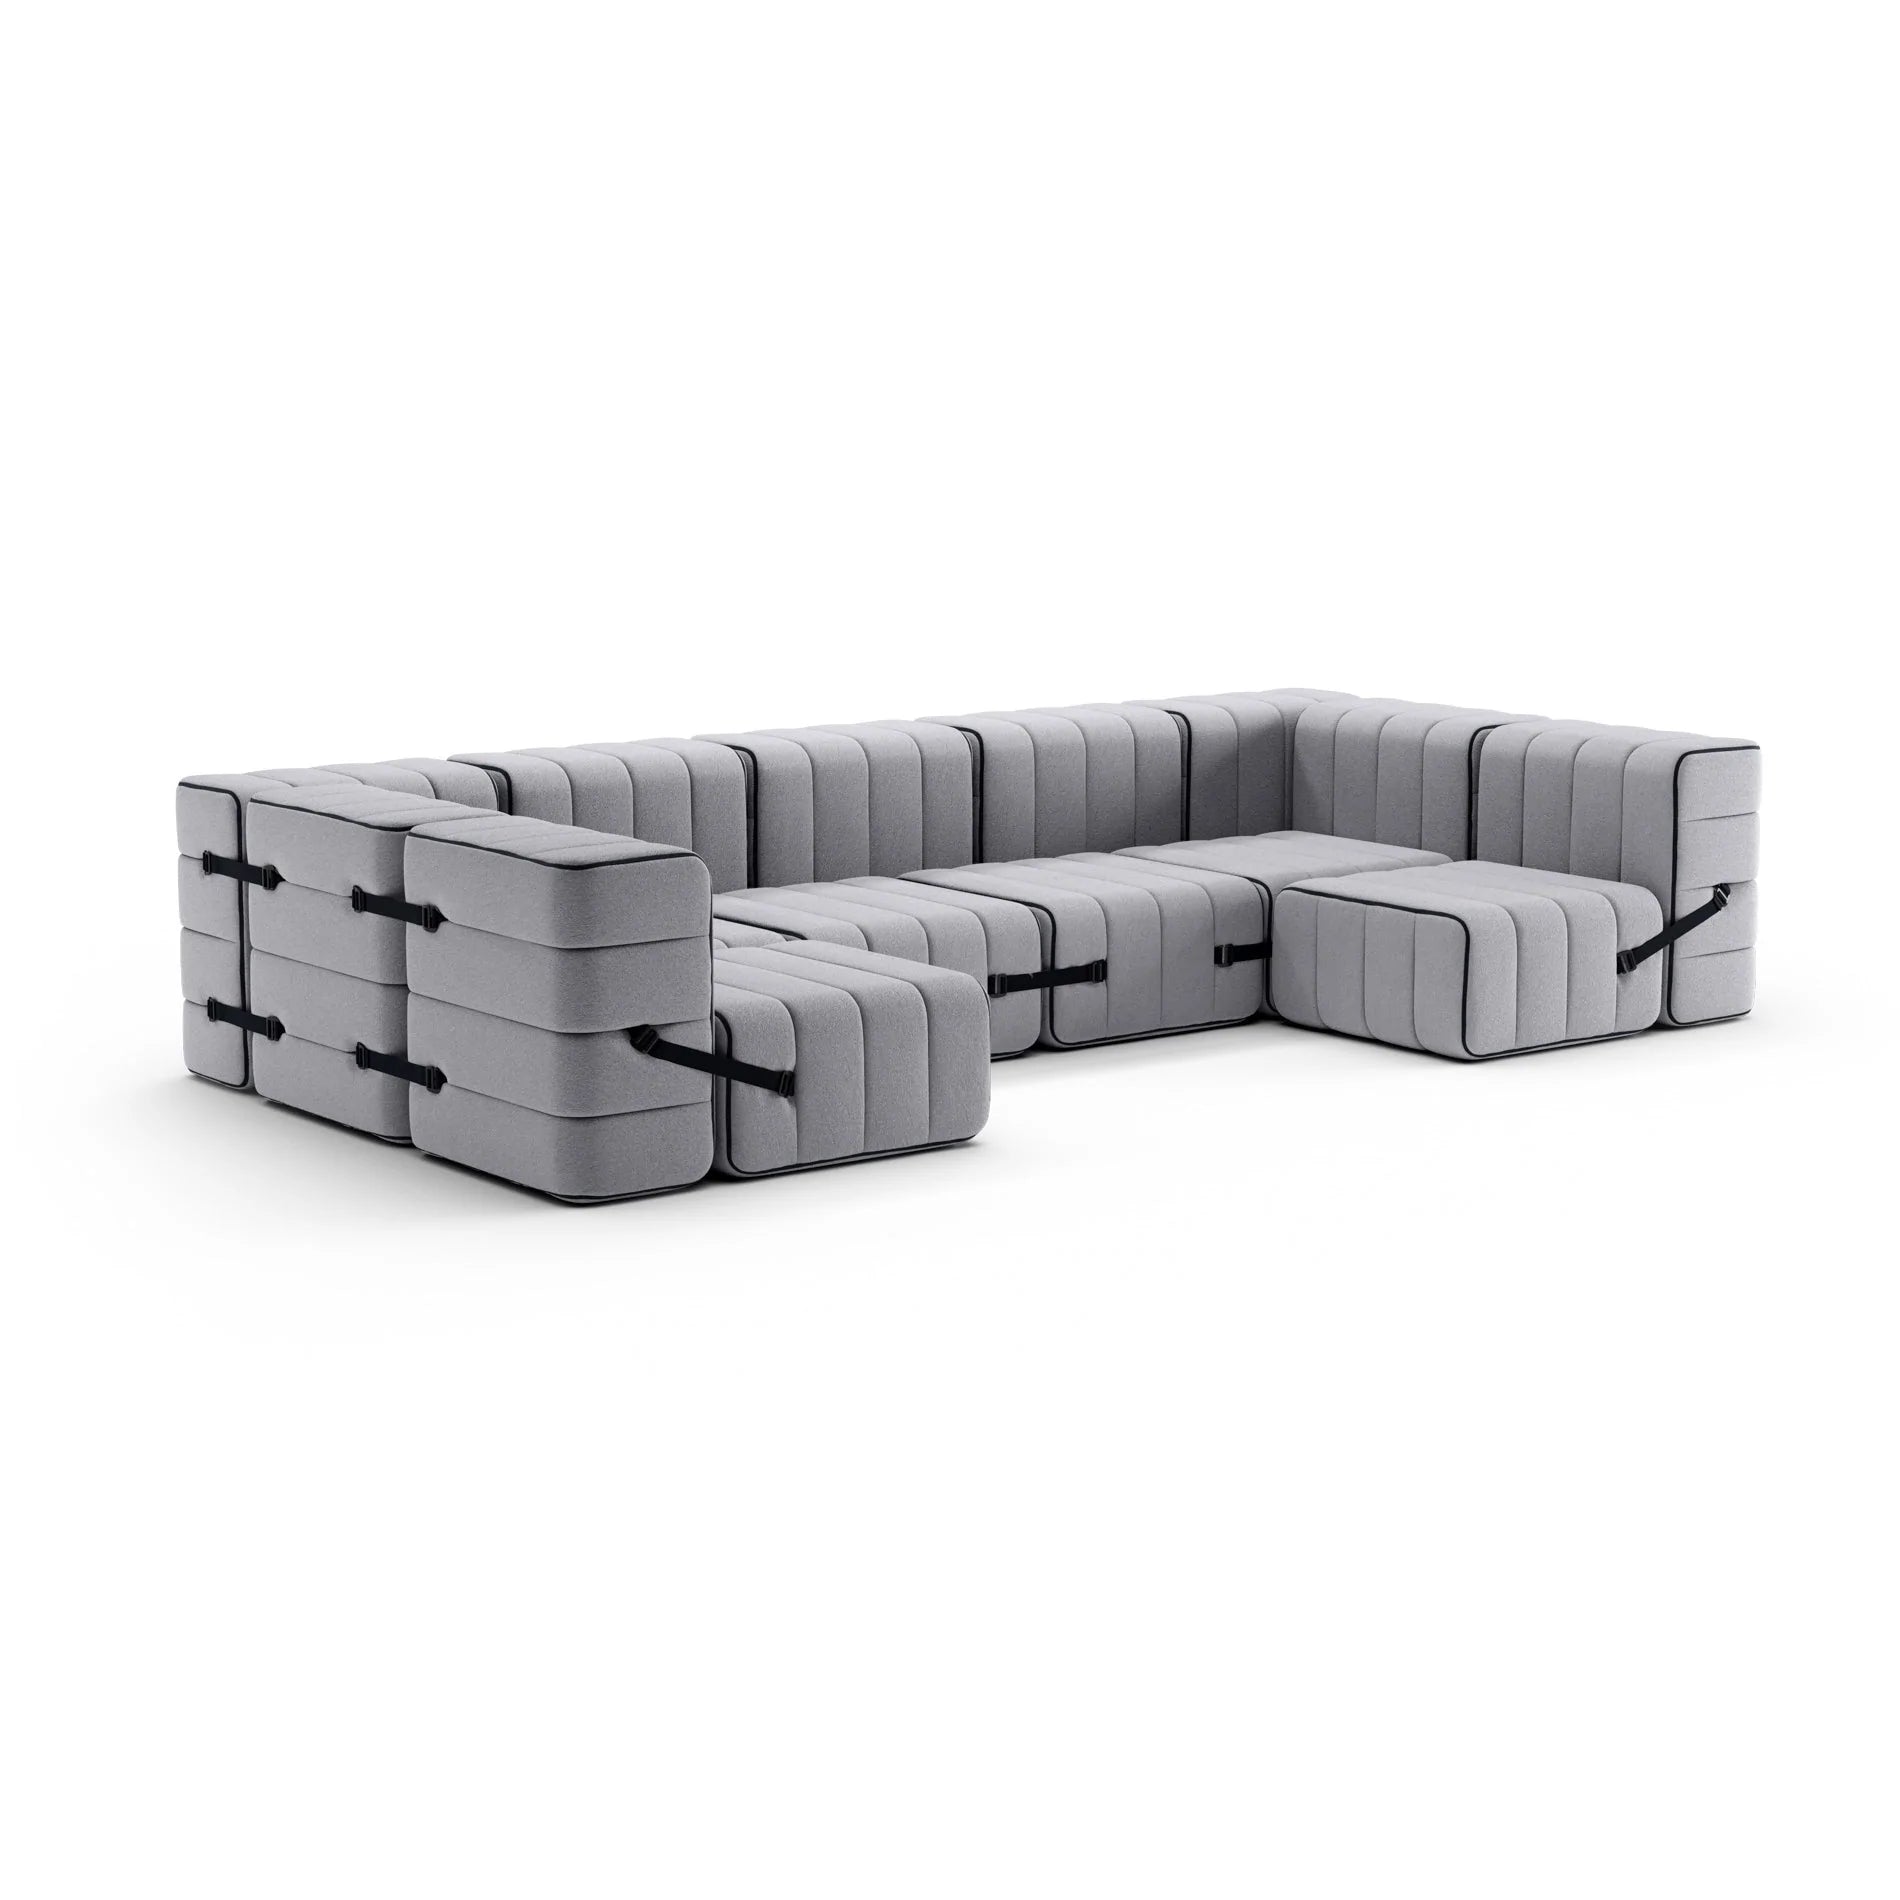 Modular sofa system Curt - Jet gray sofas by Ambivalenz